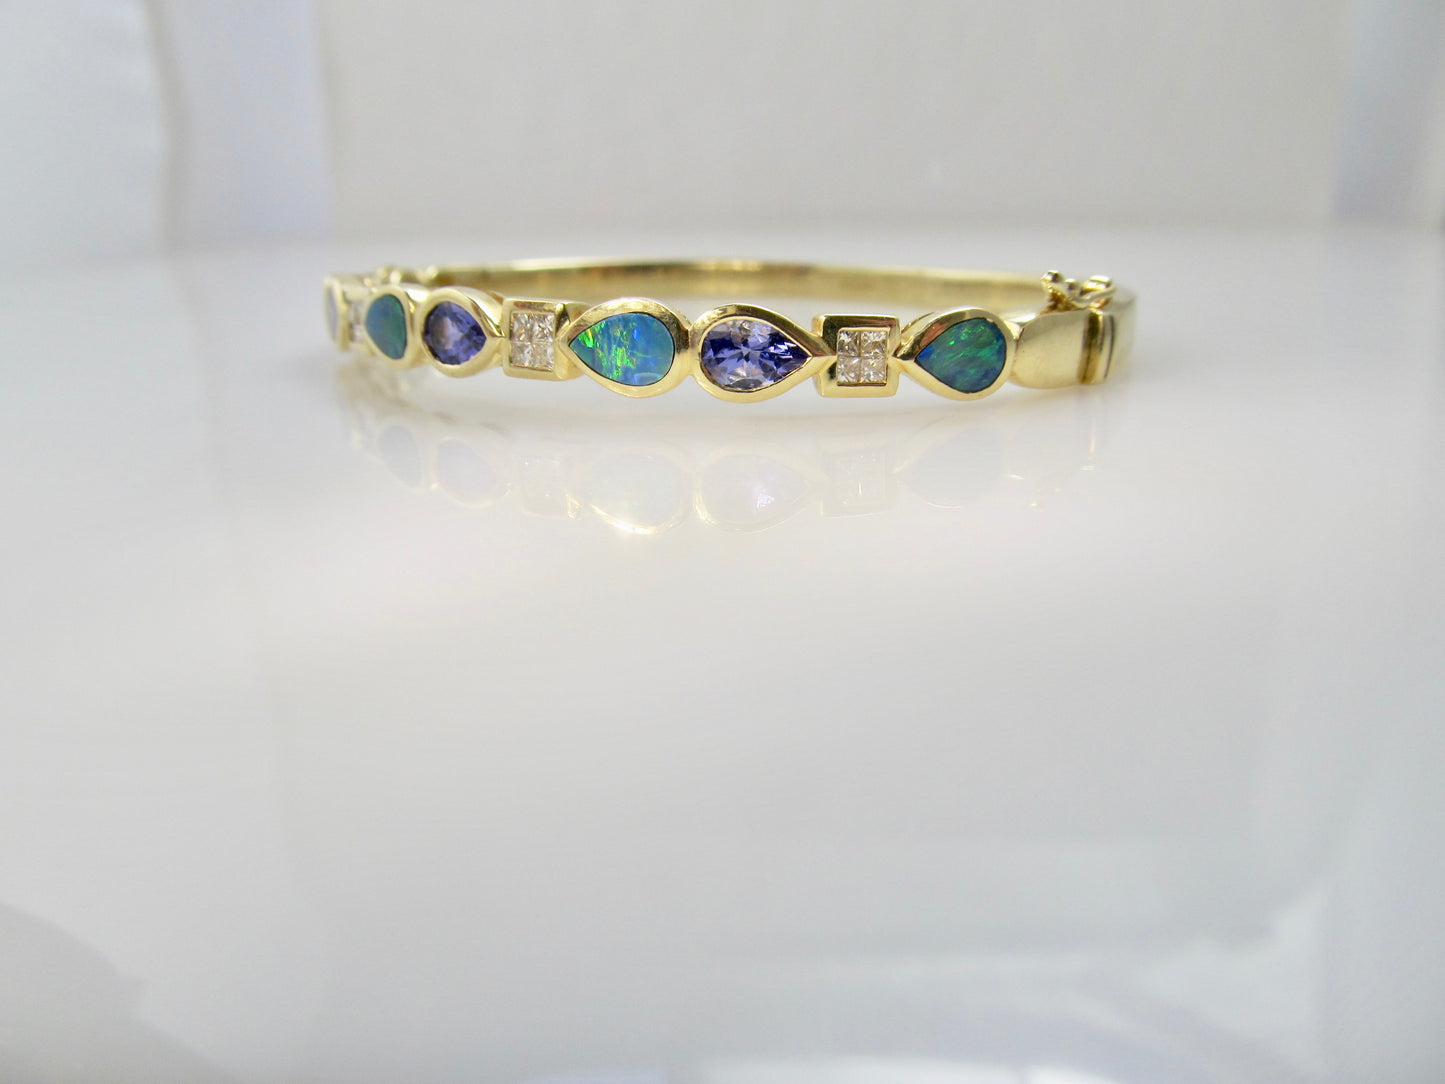 Tanzanite, opal and diamond bangle bracelet